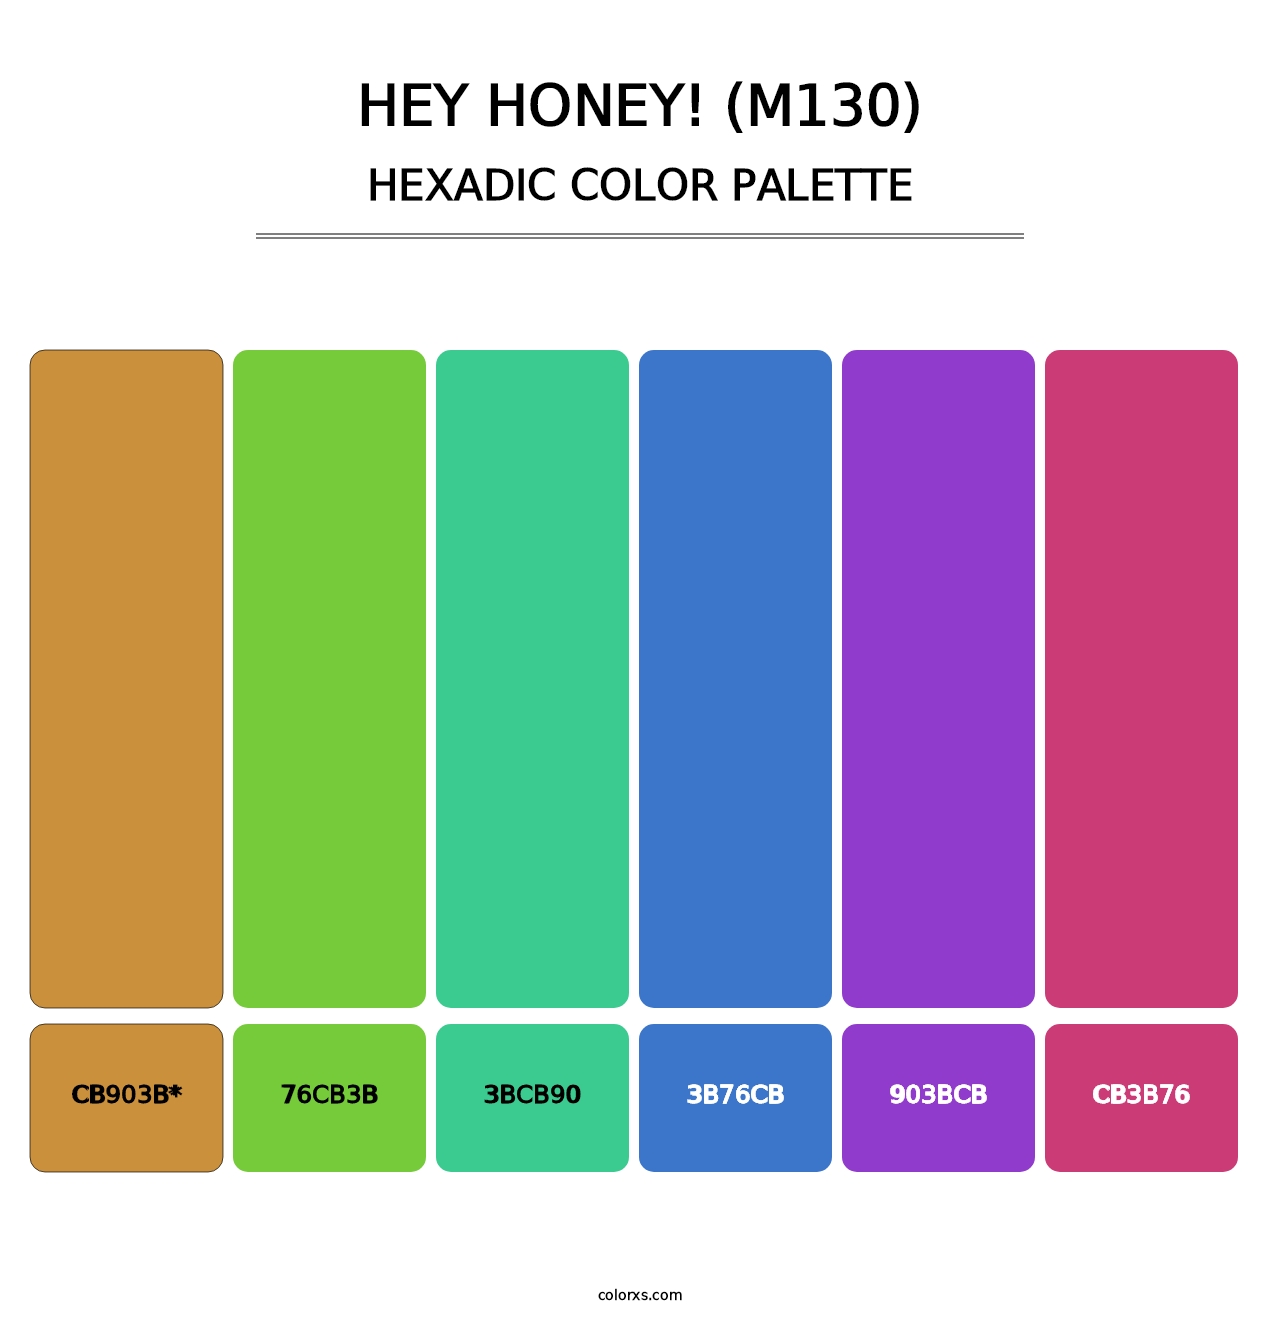 Hey Honey! (M130) - Hexadic Color Palette